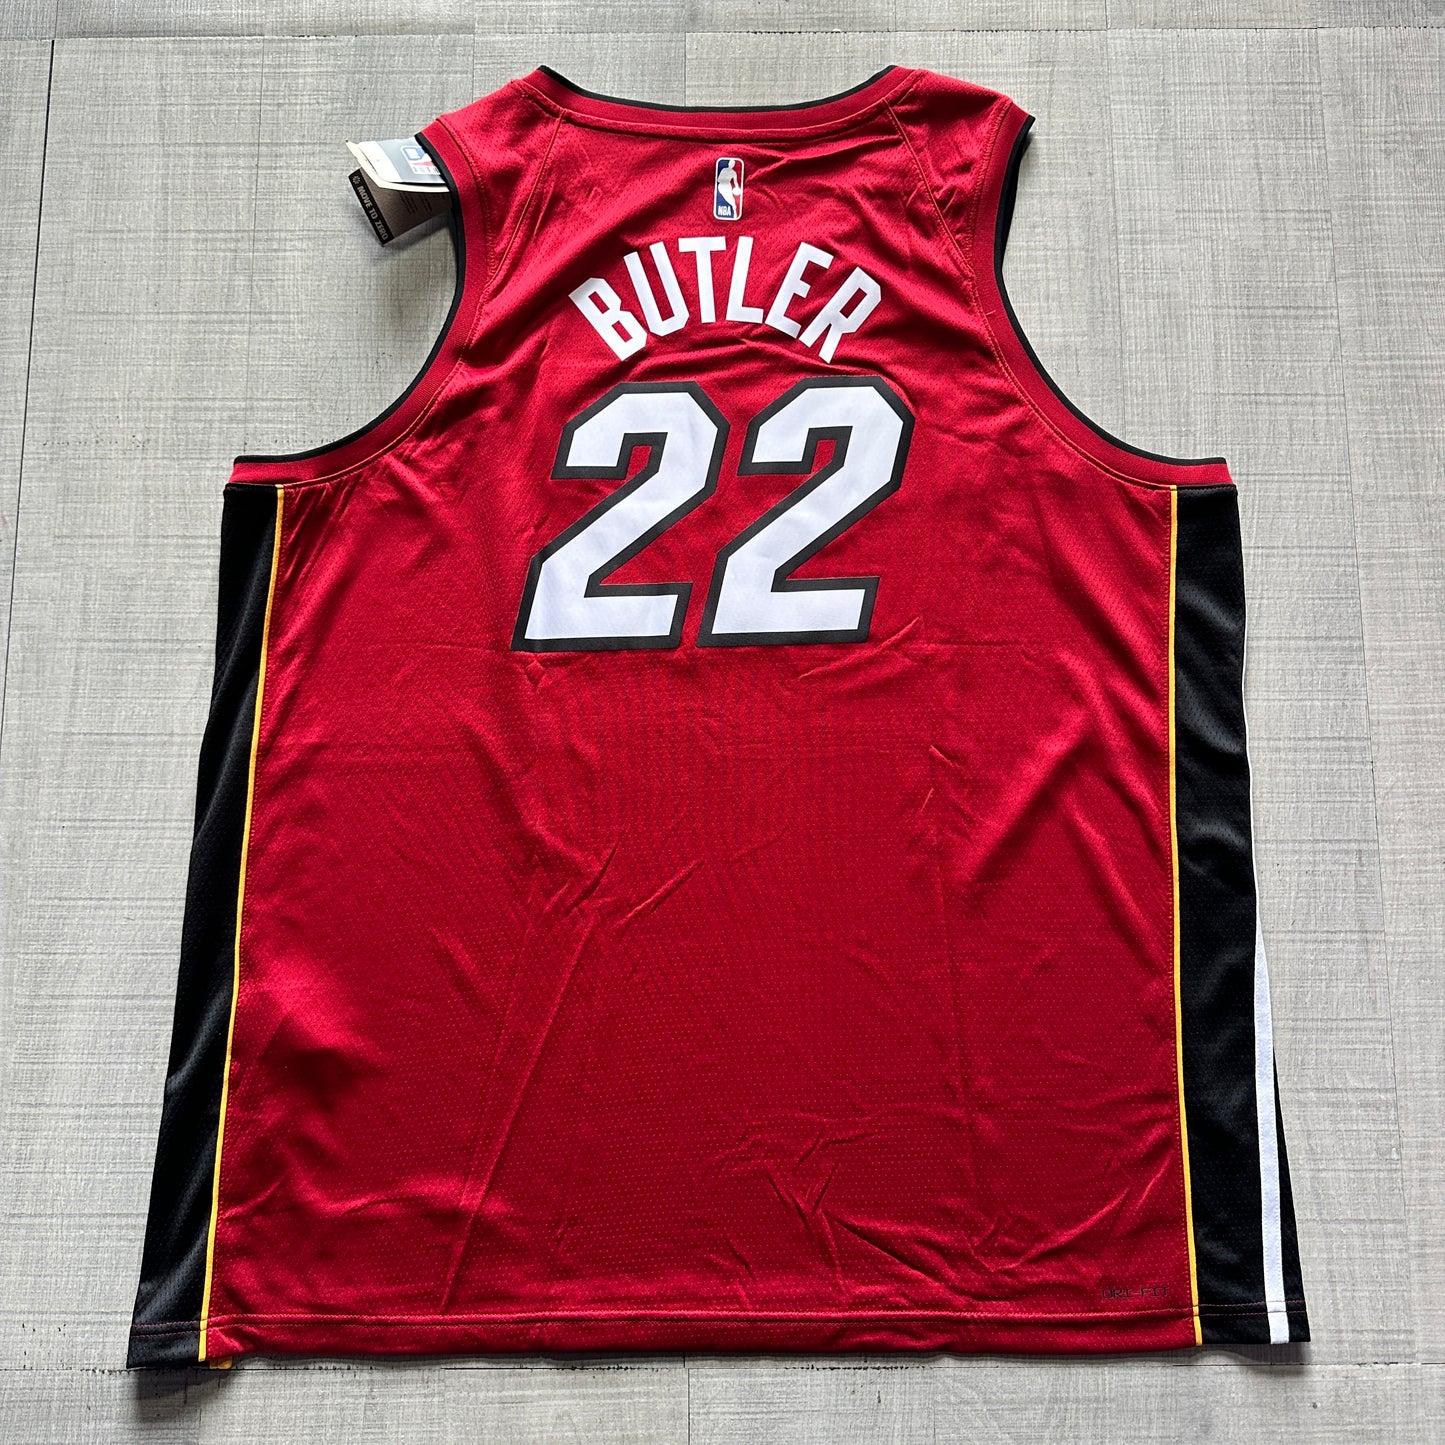 Jimmy Butler Miami Heat Statement Edition Nike Jersey